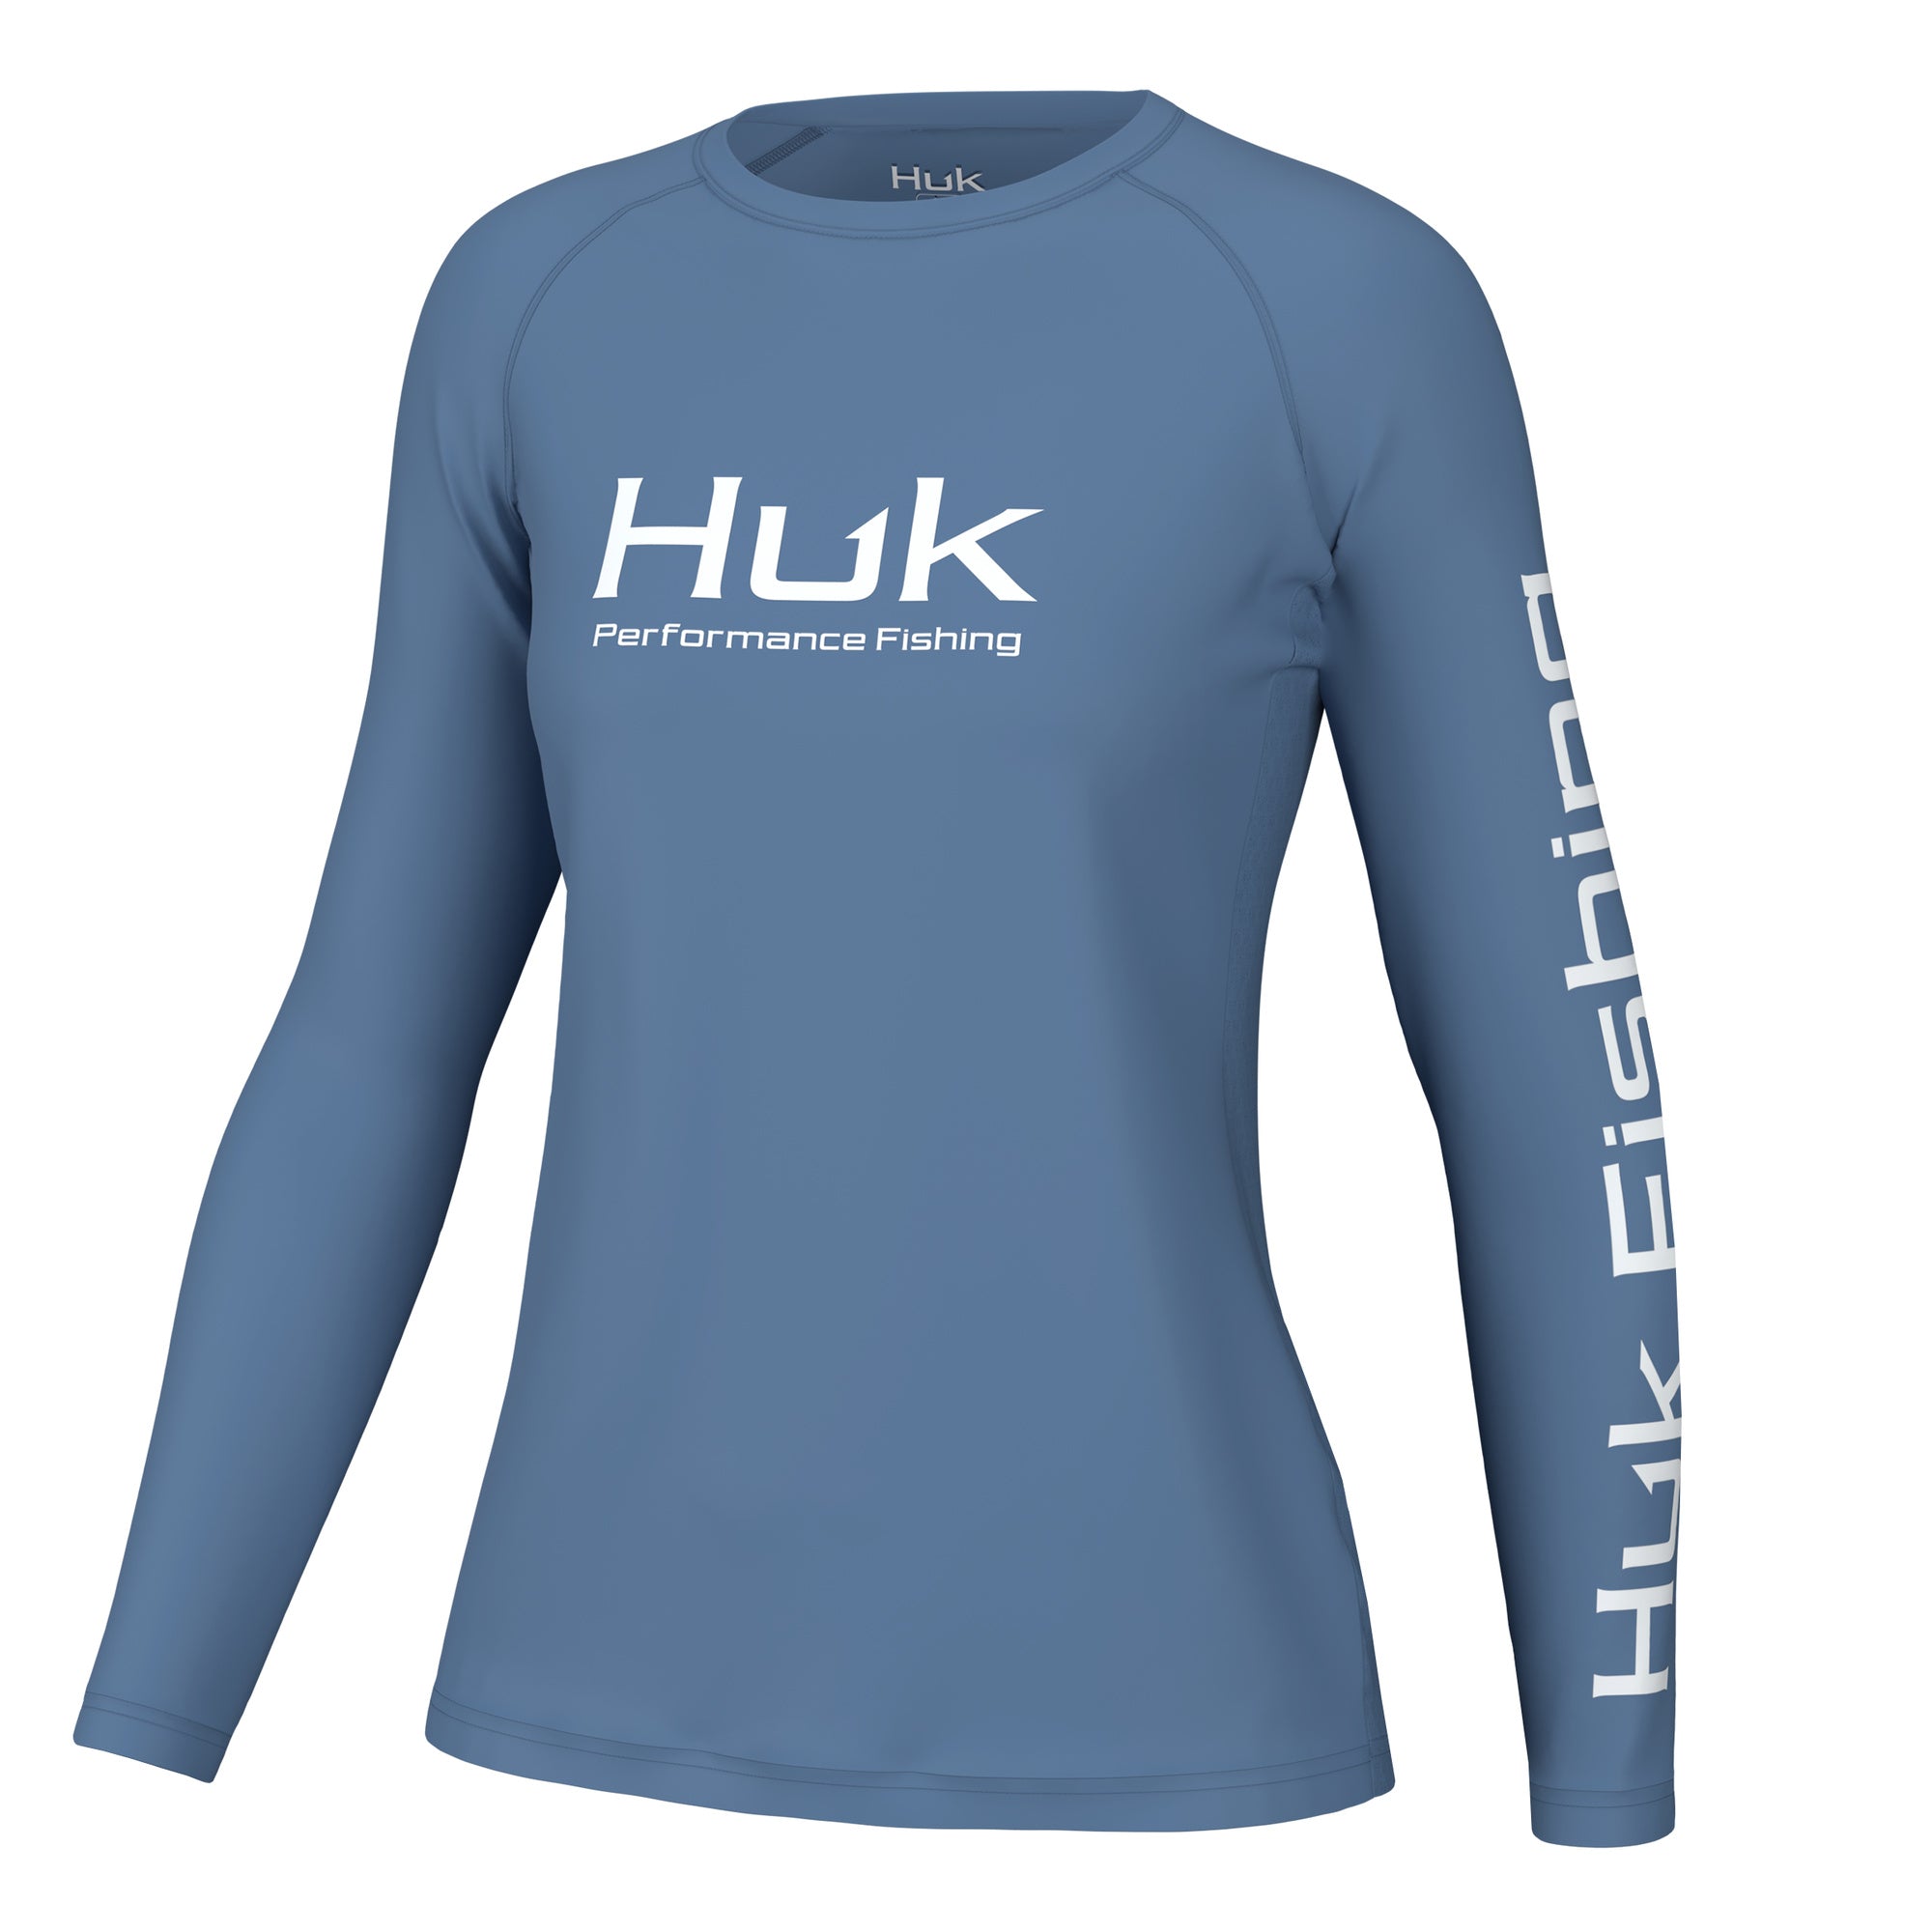 HUK Womens Extra Small XS Performance Long Sleeve Fishing Shirt Polyester